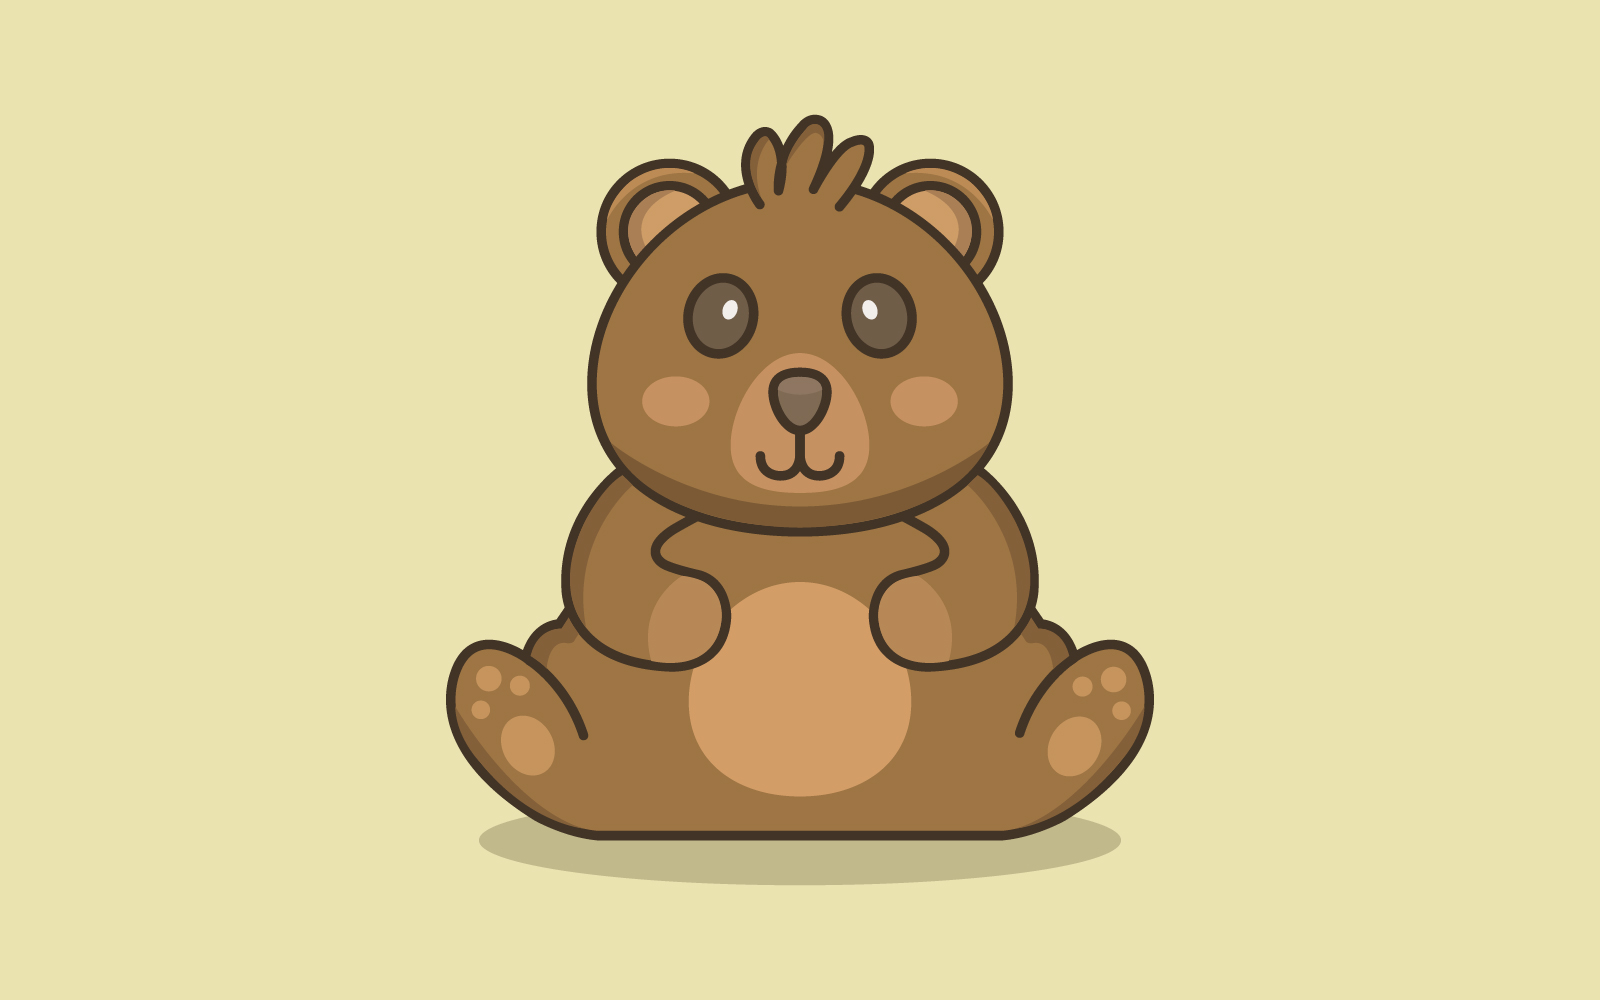 Teddy bear illustrated in vector